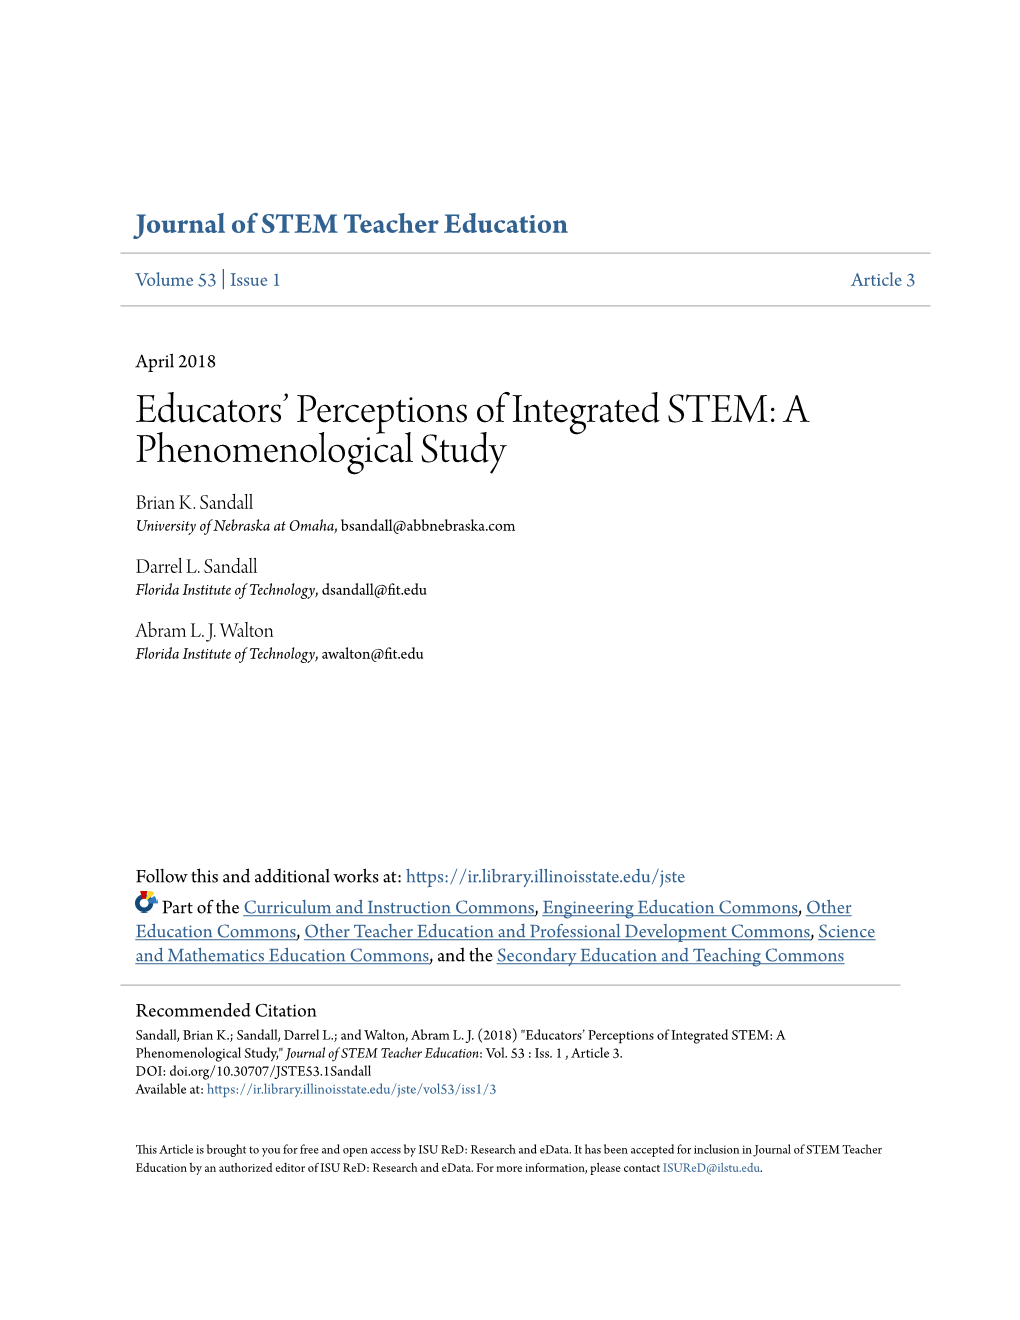 Educators' Perceptions of Integrated STEM: a Phenomenological Study